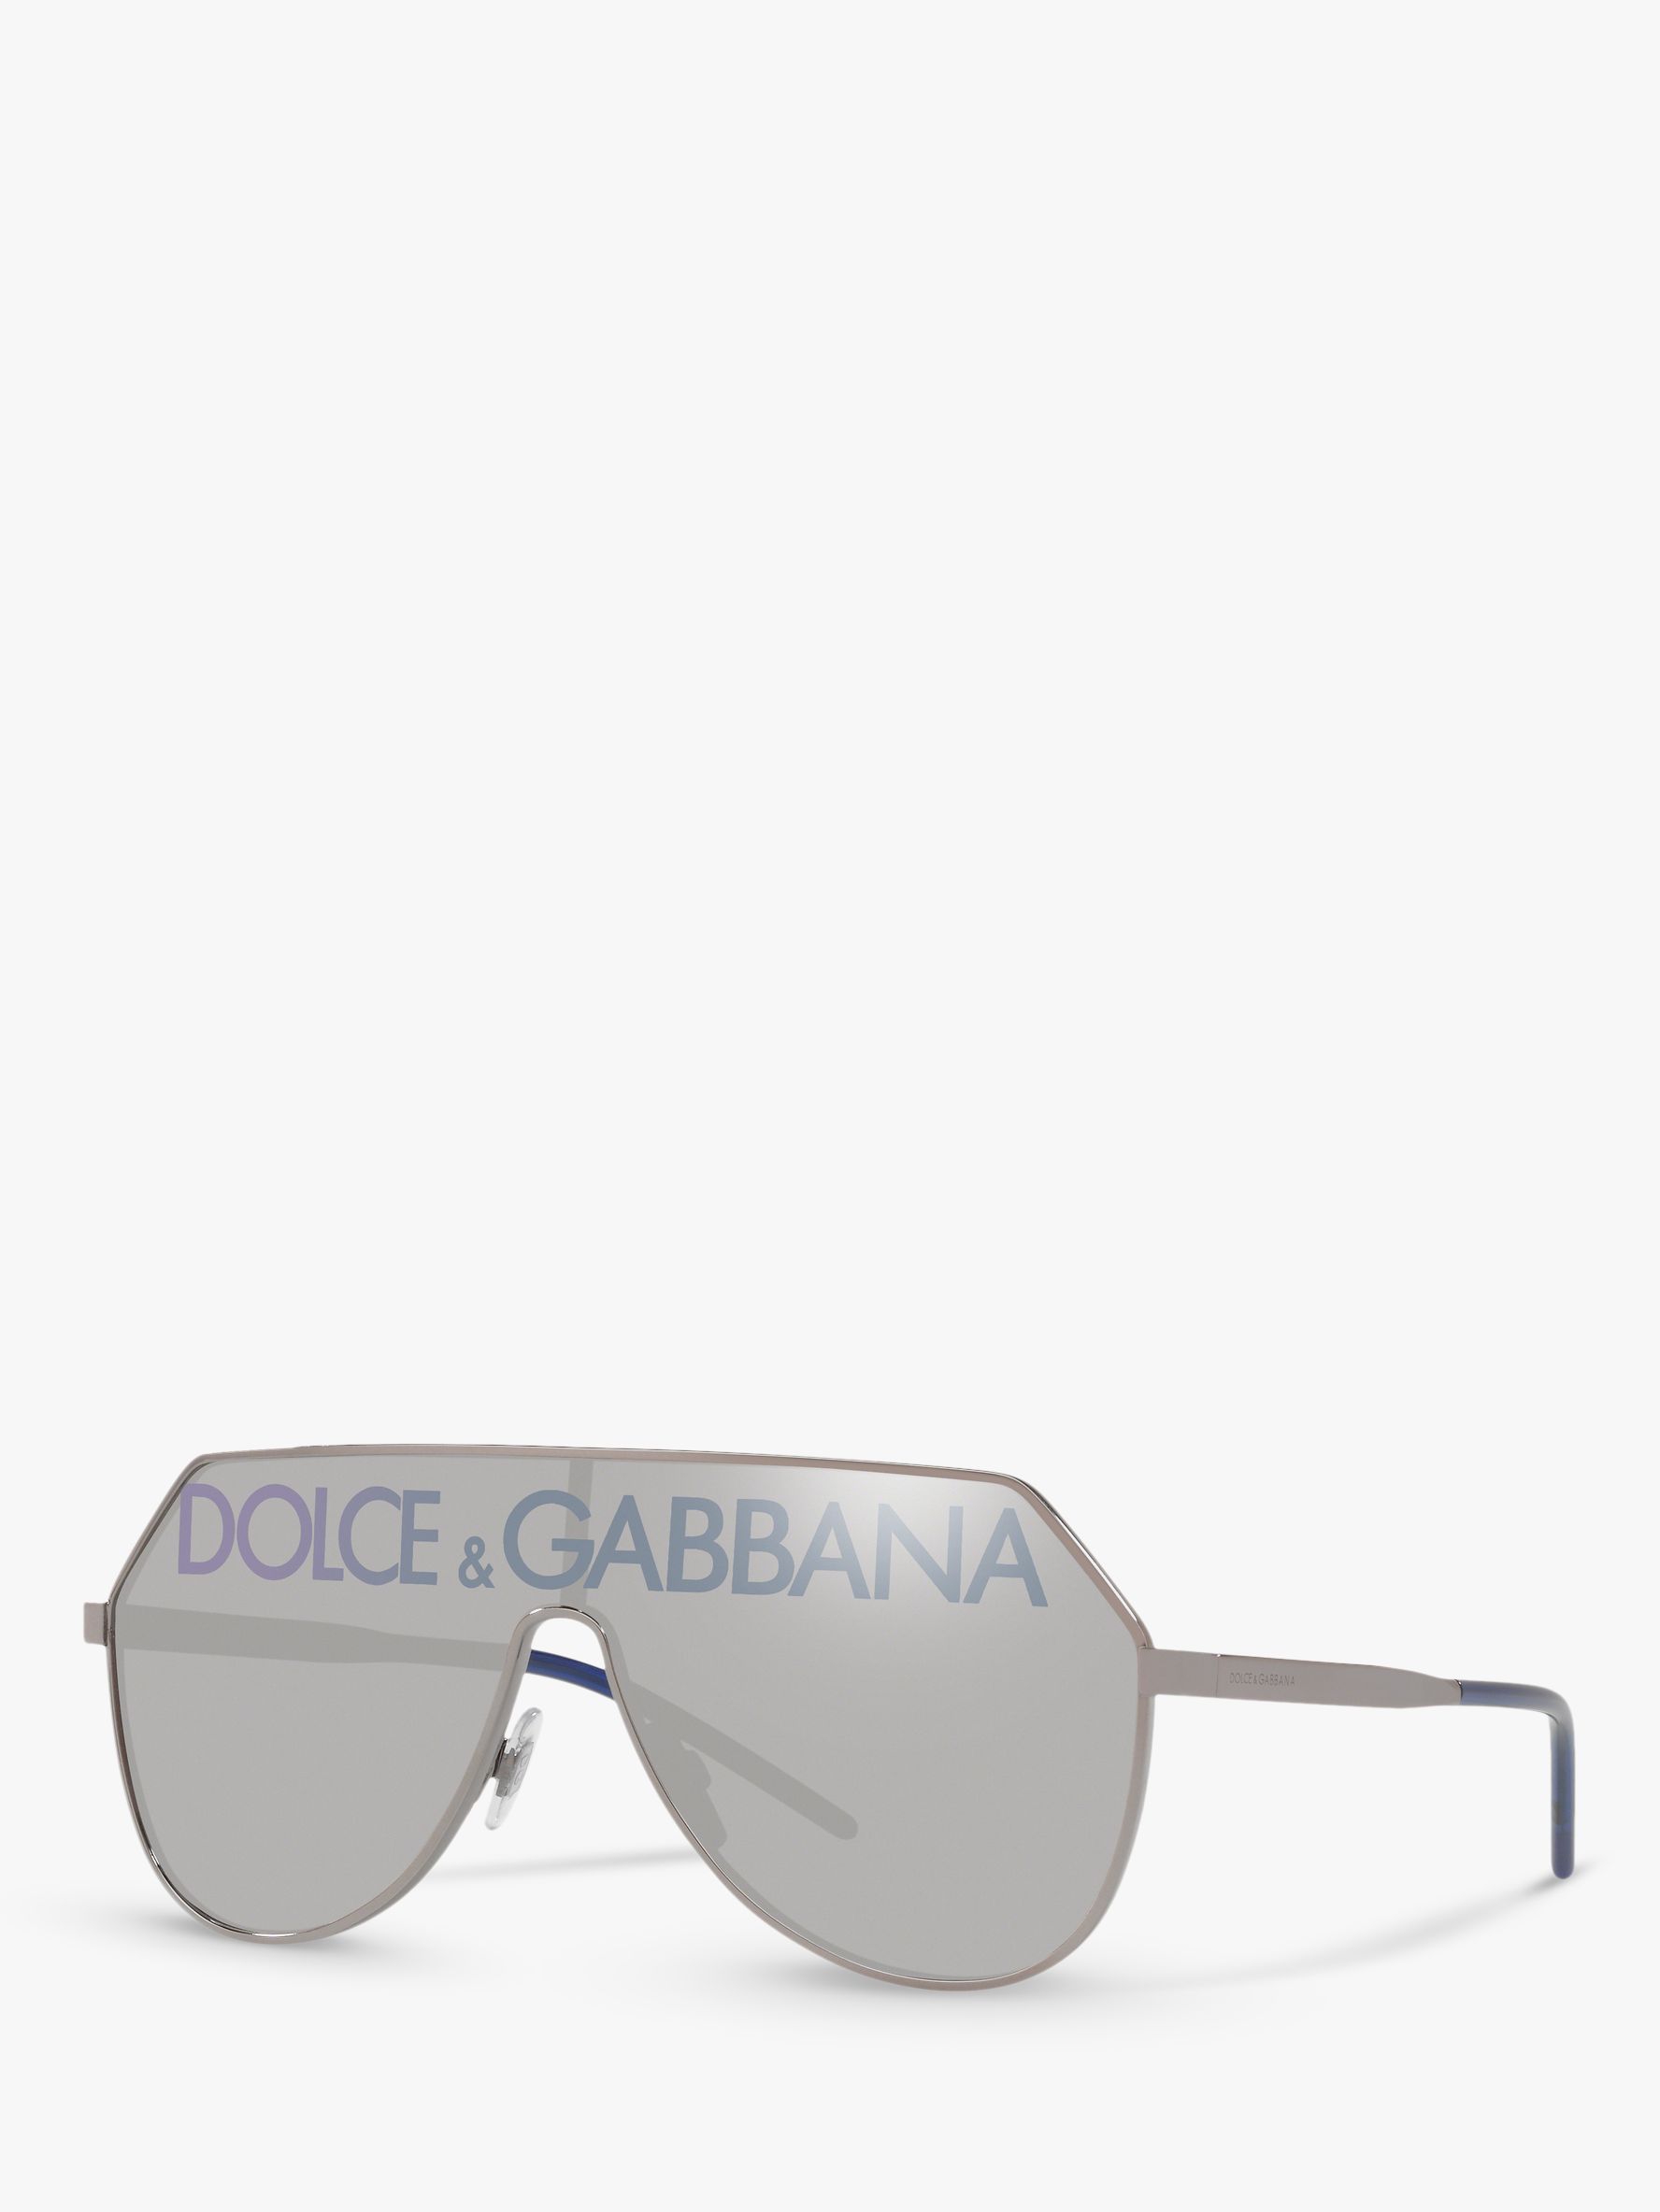 dolce & gabbana men's aviator sunglasses